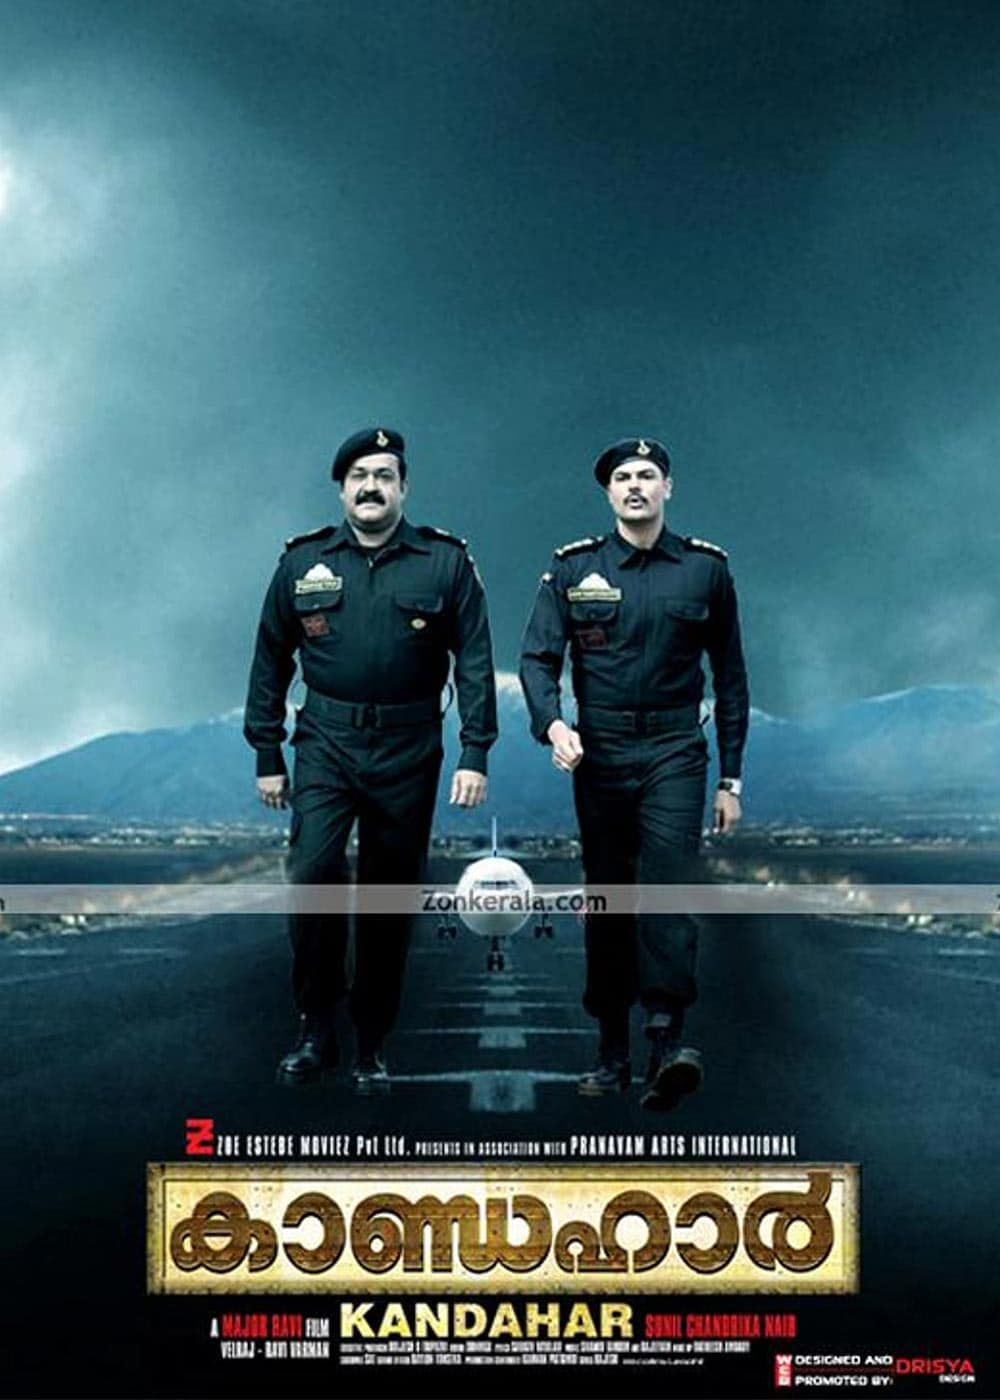 Kandahar Movie (2010) Release Date, Review, Cast, Trailer, Watch